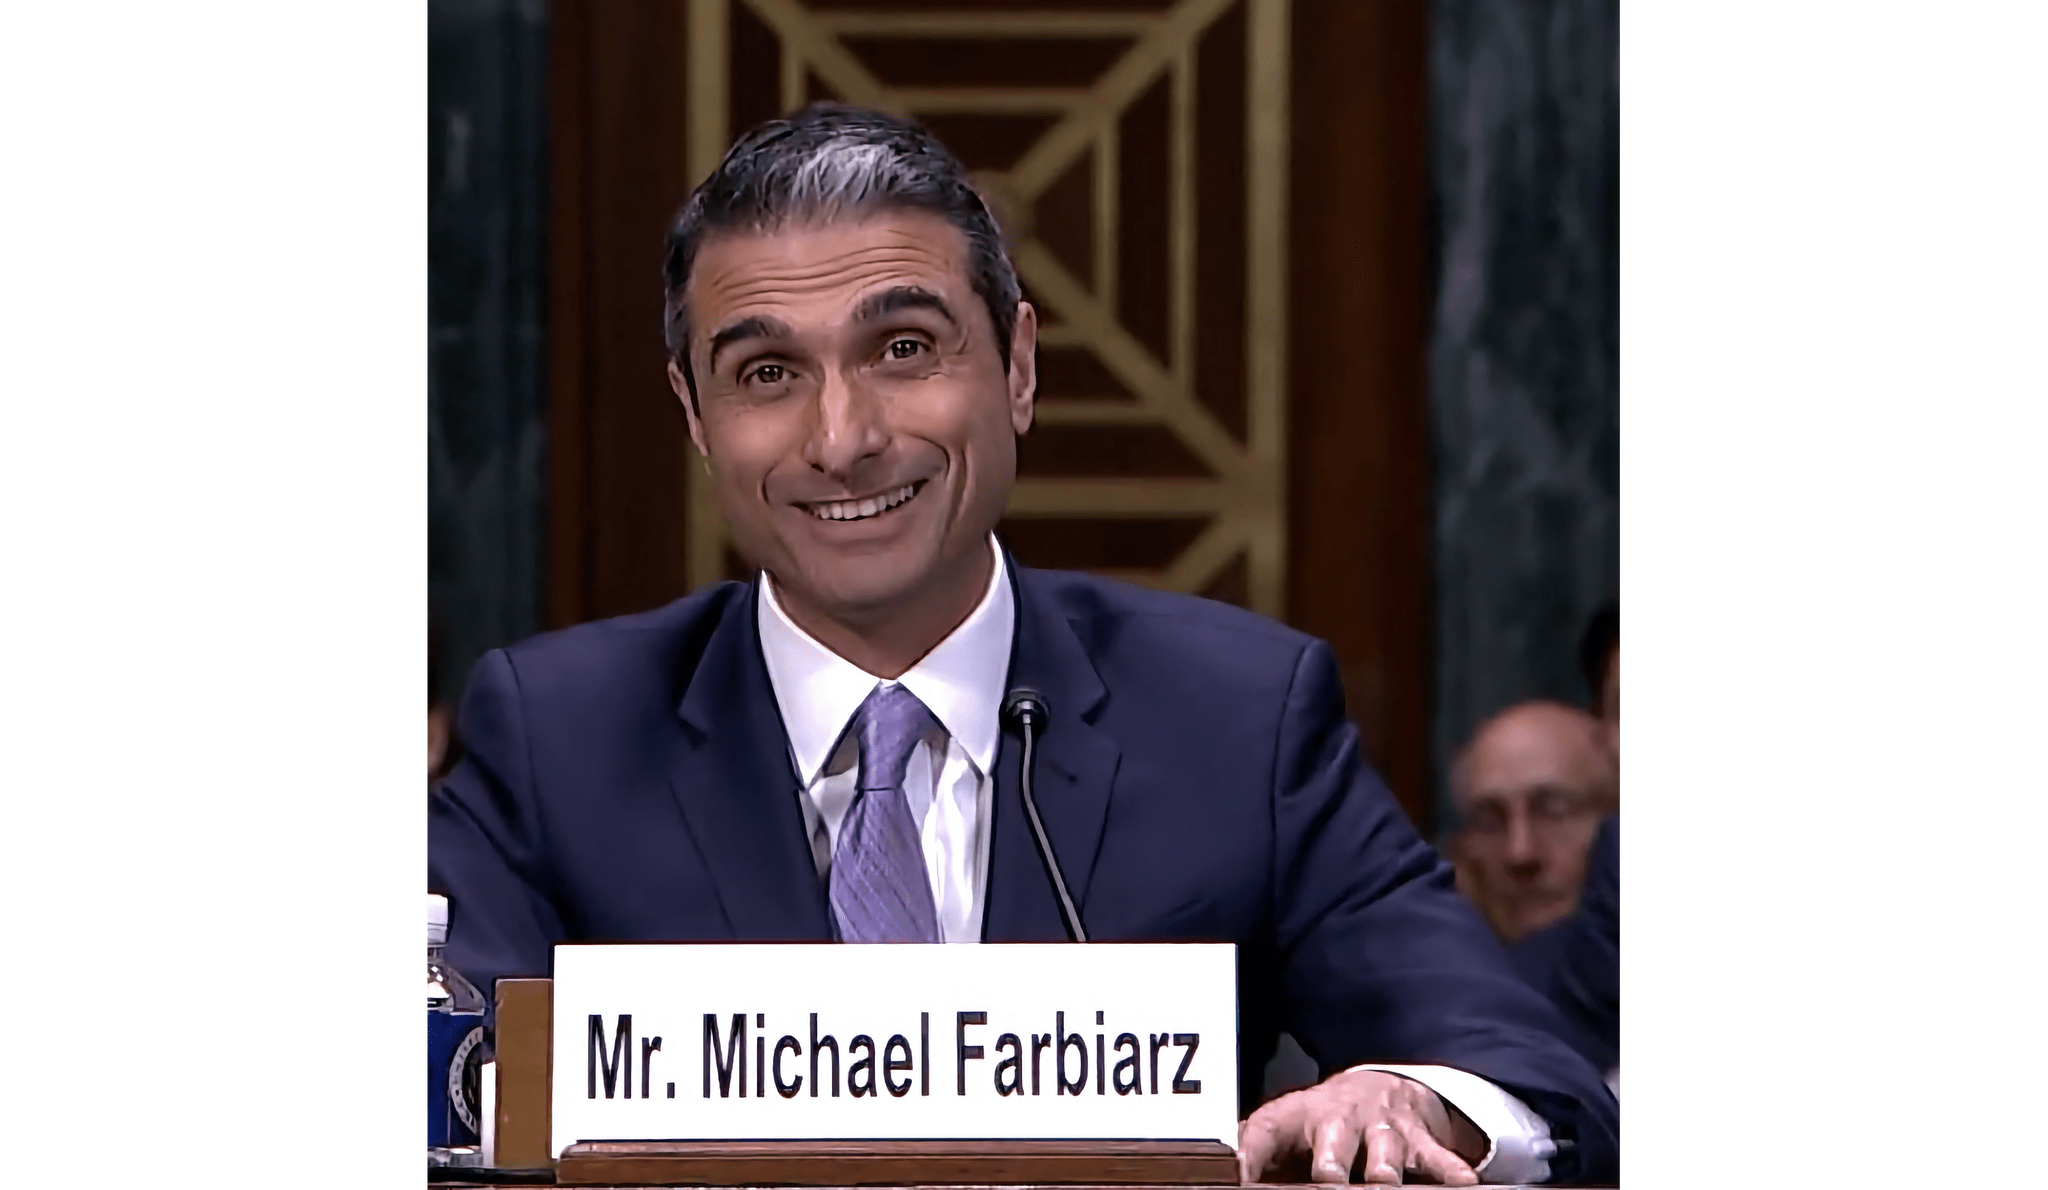 Say hello to Judge Farbiarz, who will be overseeing the DOJ's case against Apple. Source: [Wikipedia](https://en.wikipedia.org/wiki/Michael_E._Farbiarz#/media/File:Michael_Farbiarz.jpg).